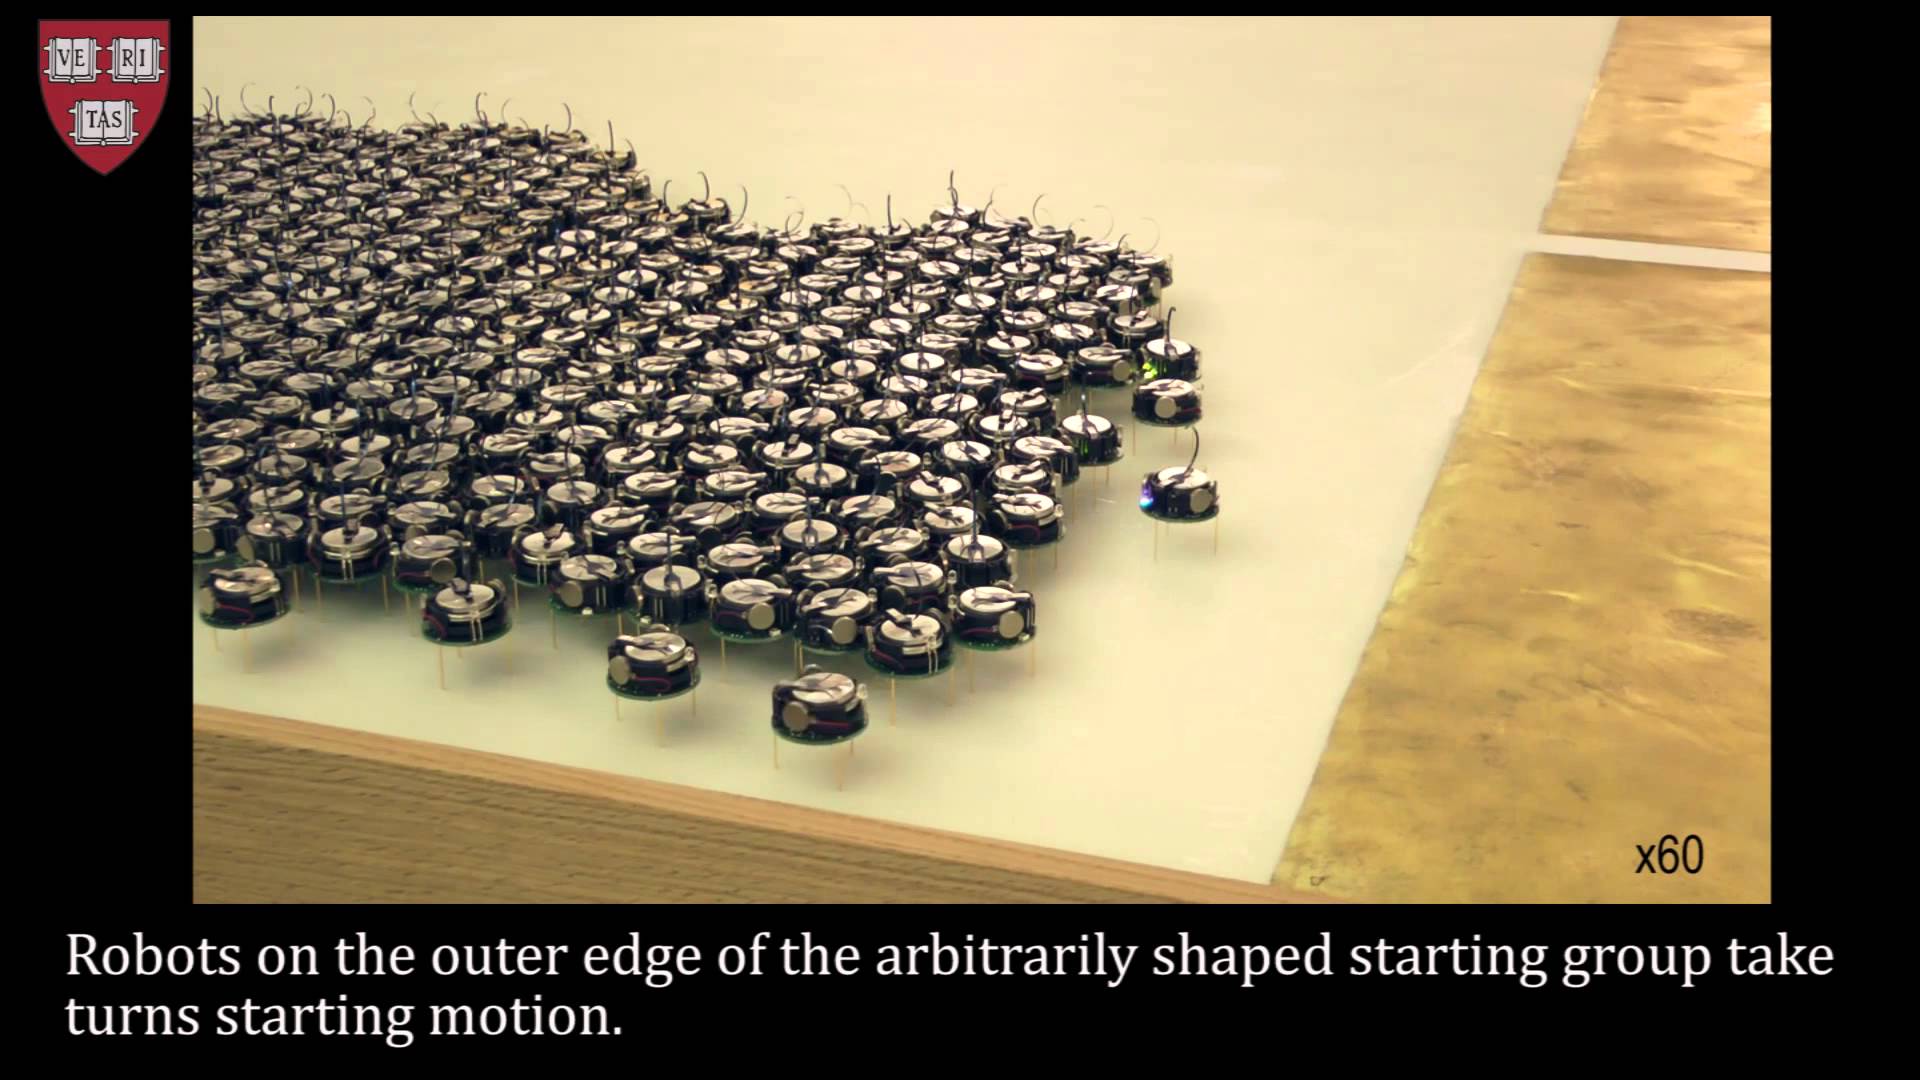 Un essaim de 1000 mini-robots qui font des formes